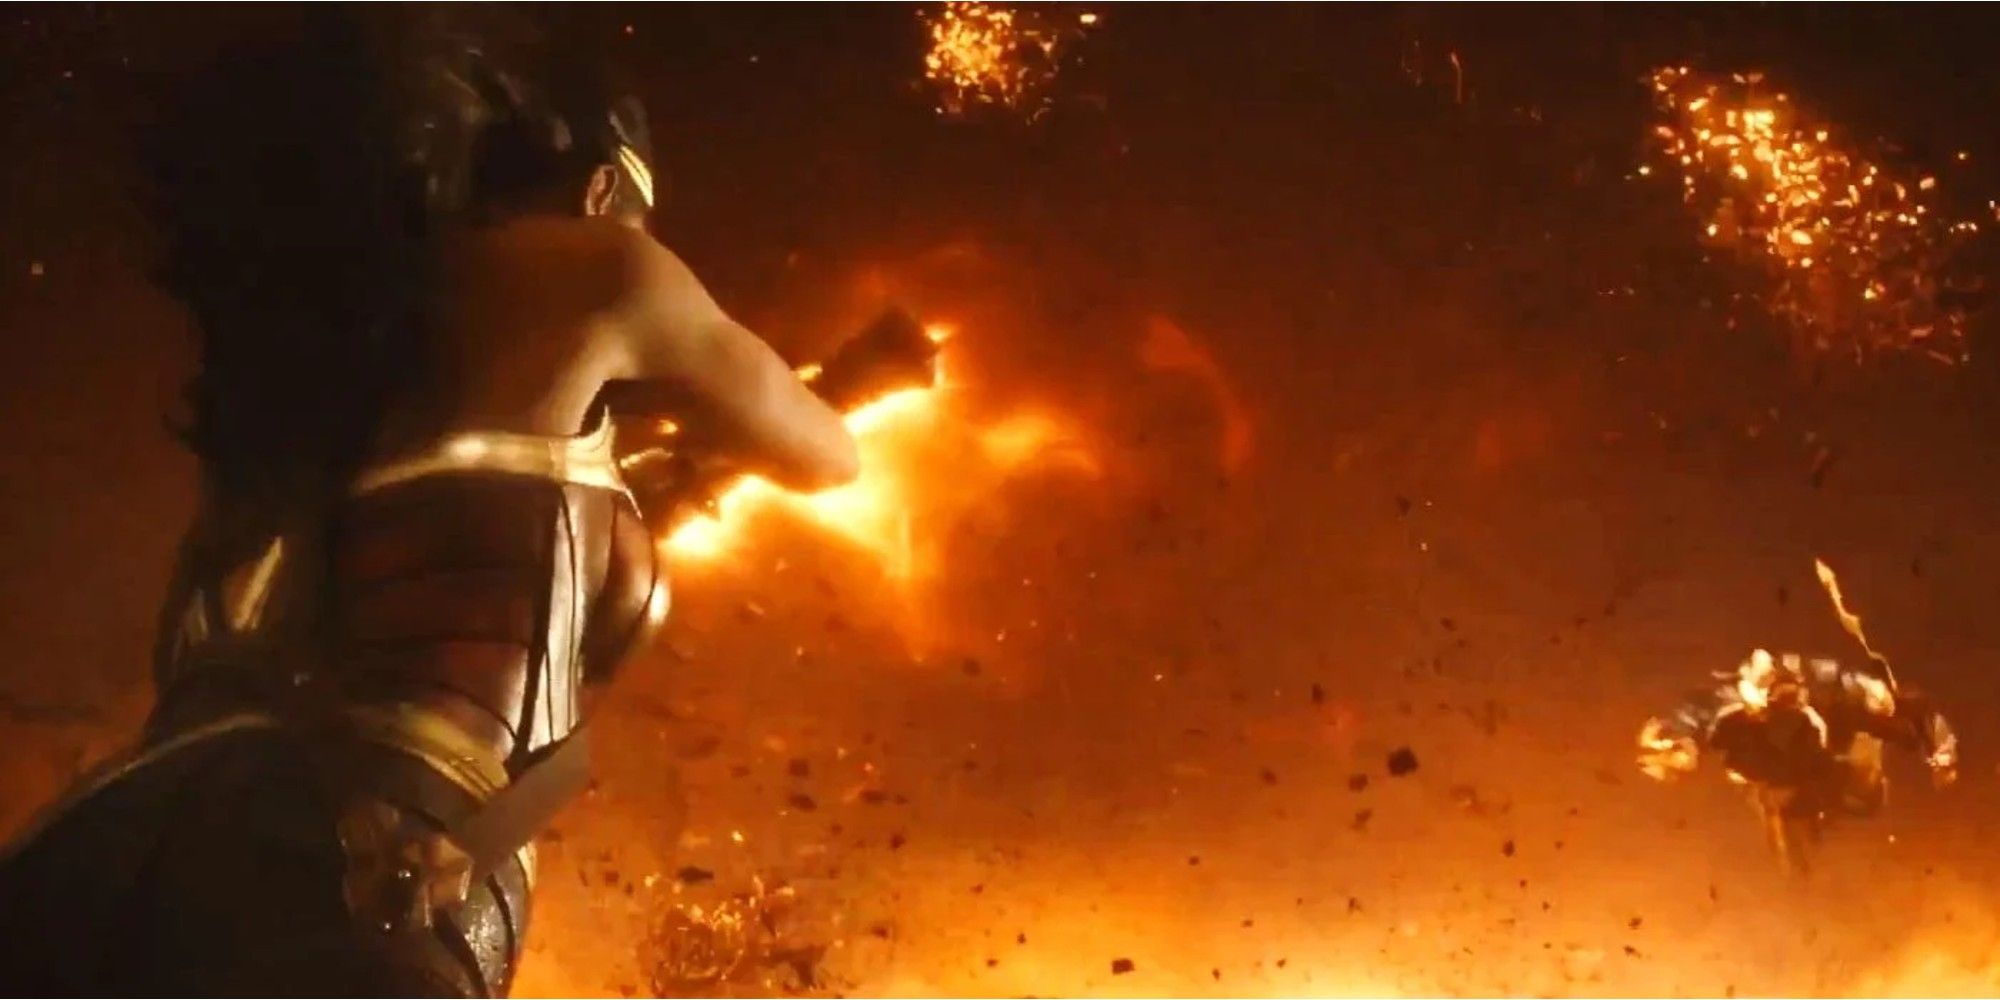 Wonder woman vs Ares